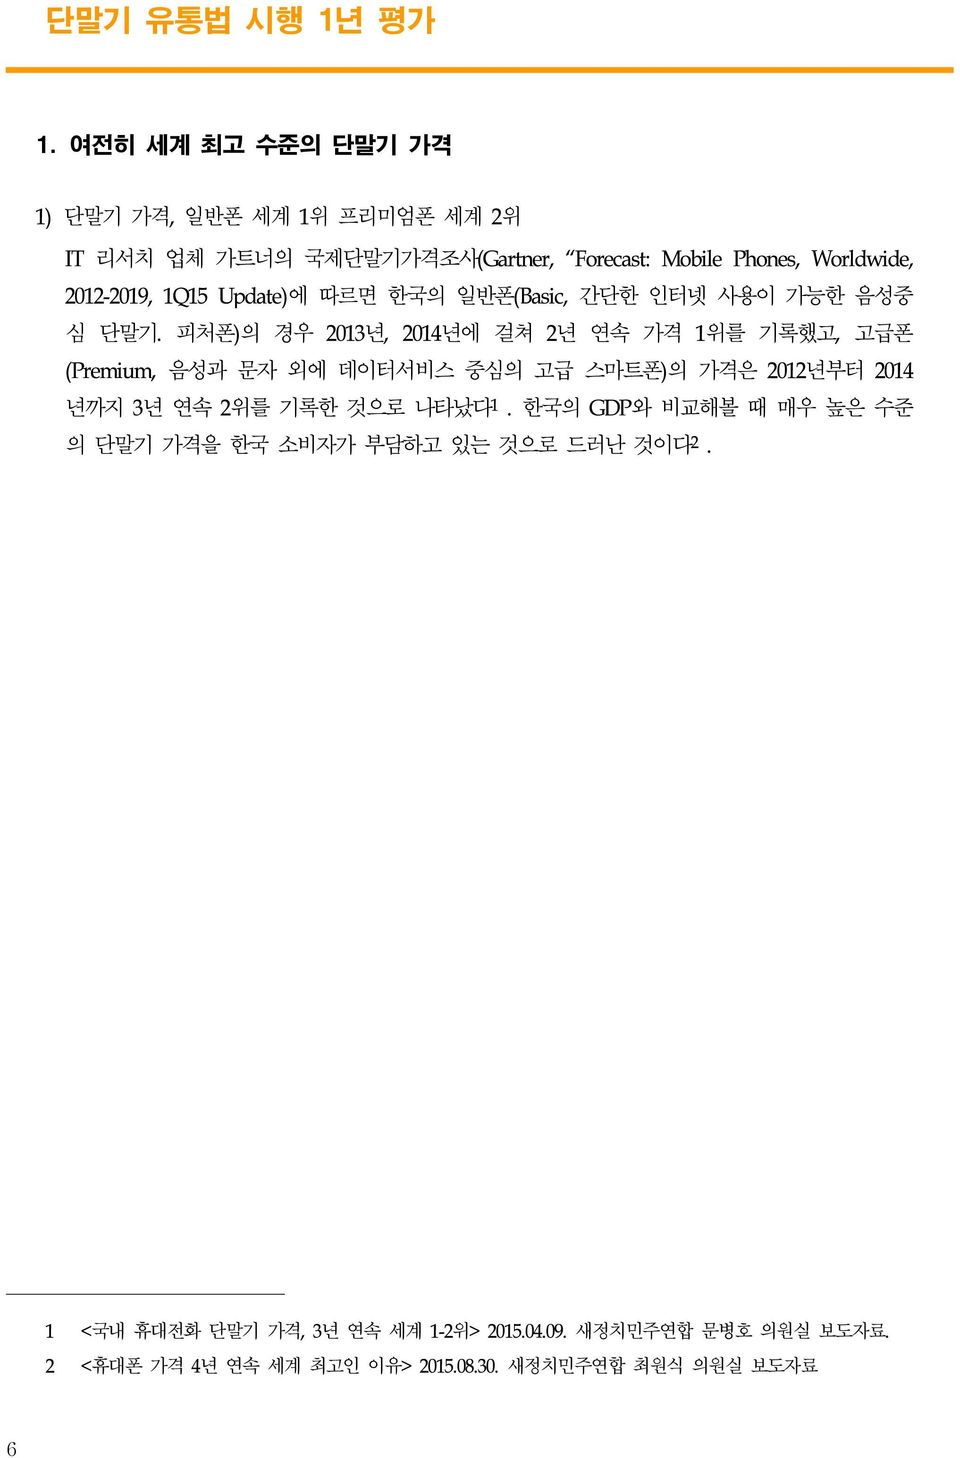 1Q15 Update)에 따르면 한국의 일반폰(Basic, 간단한 인터넷 사용이 가능한 음성중 심 단말기.